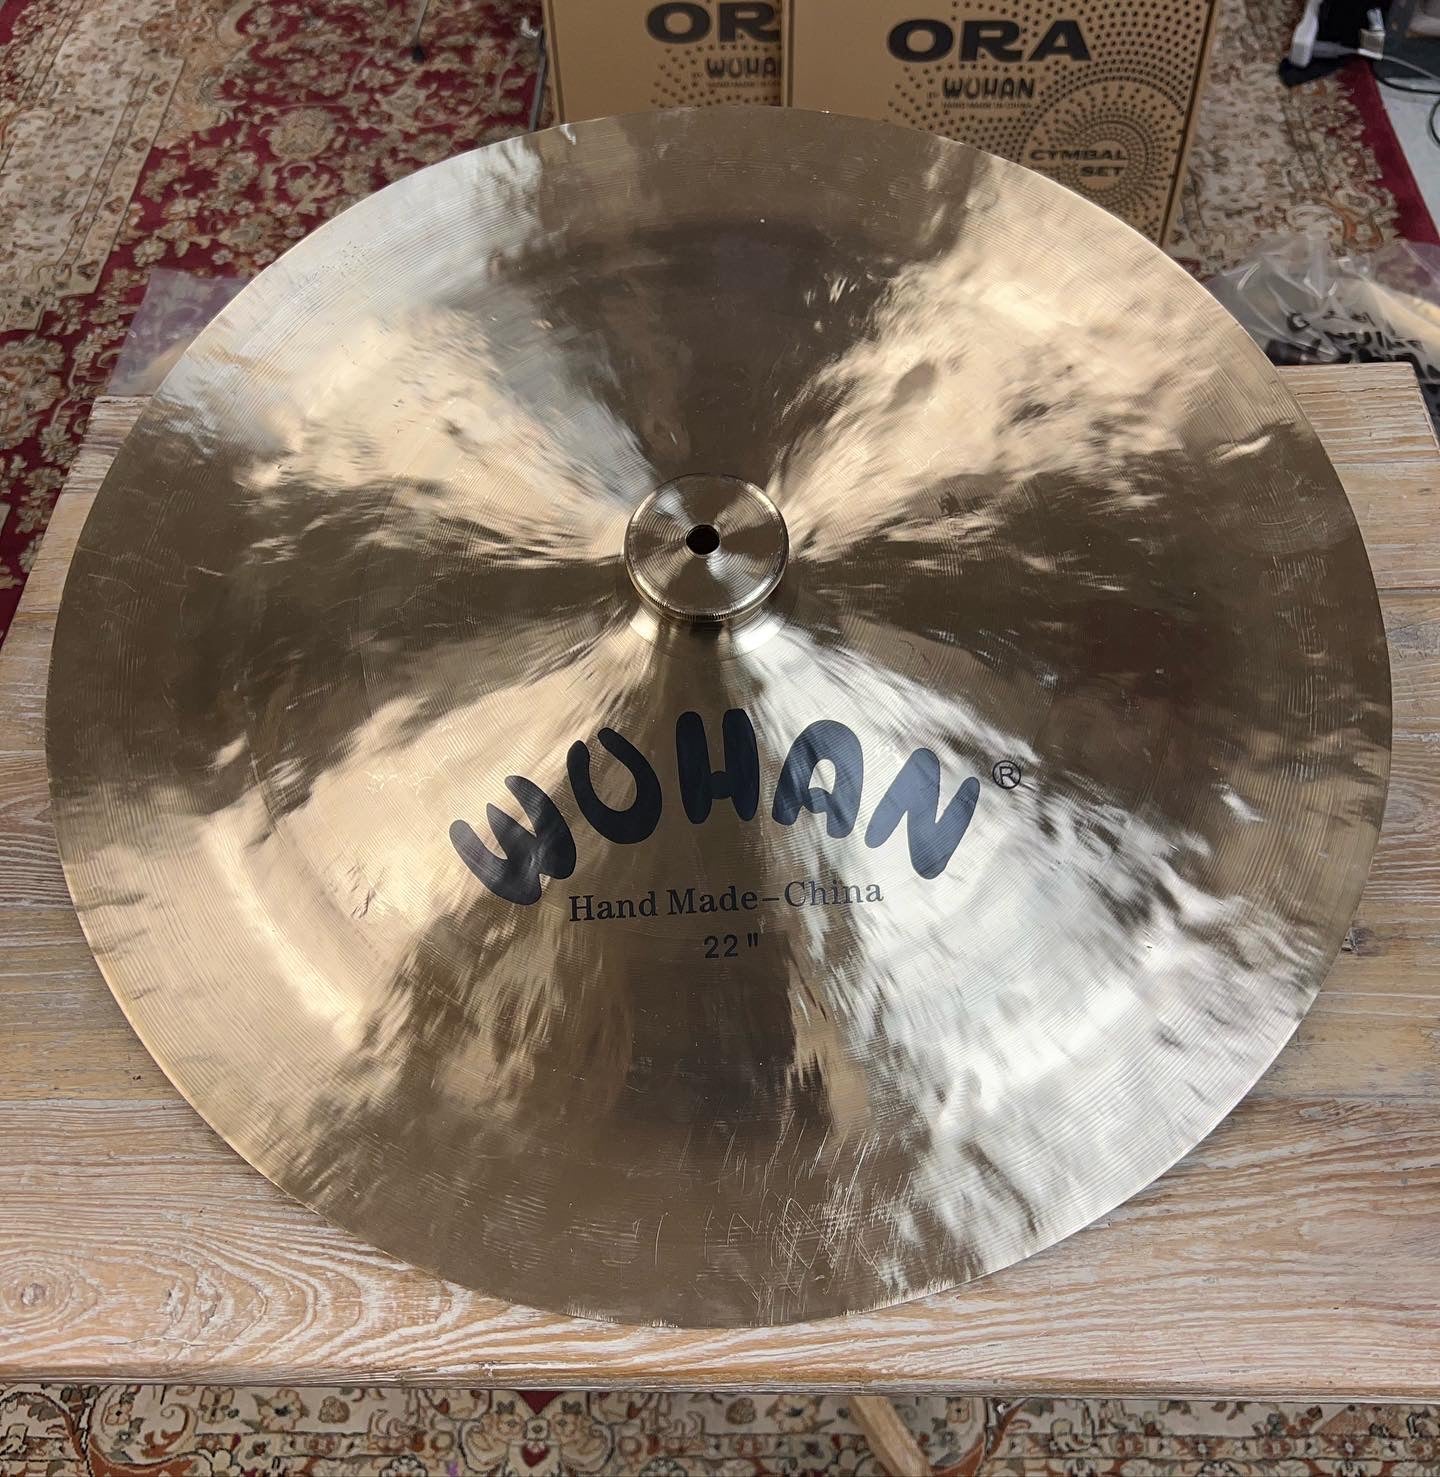 Wuhan 22” China Cymbal